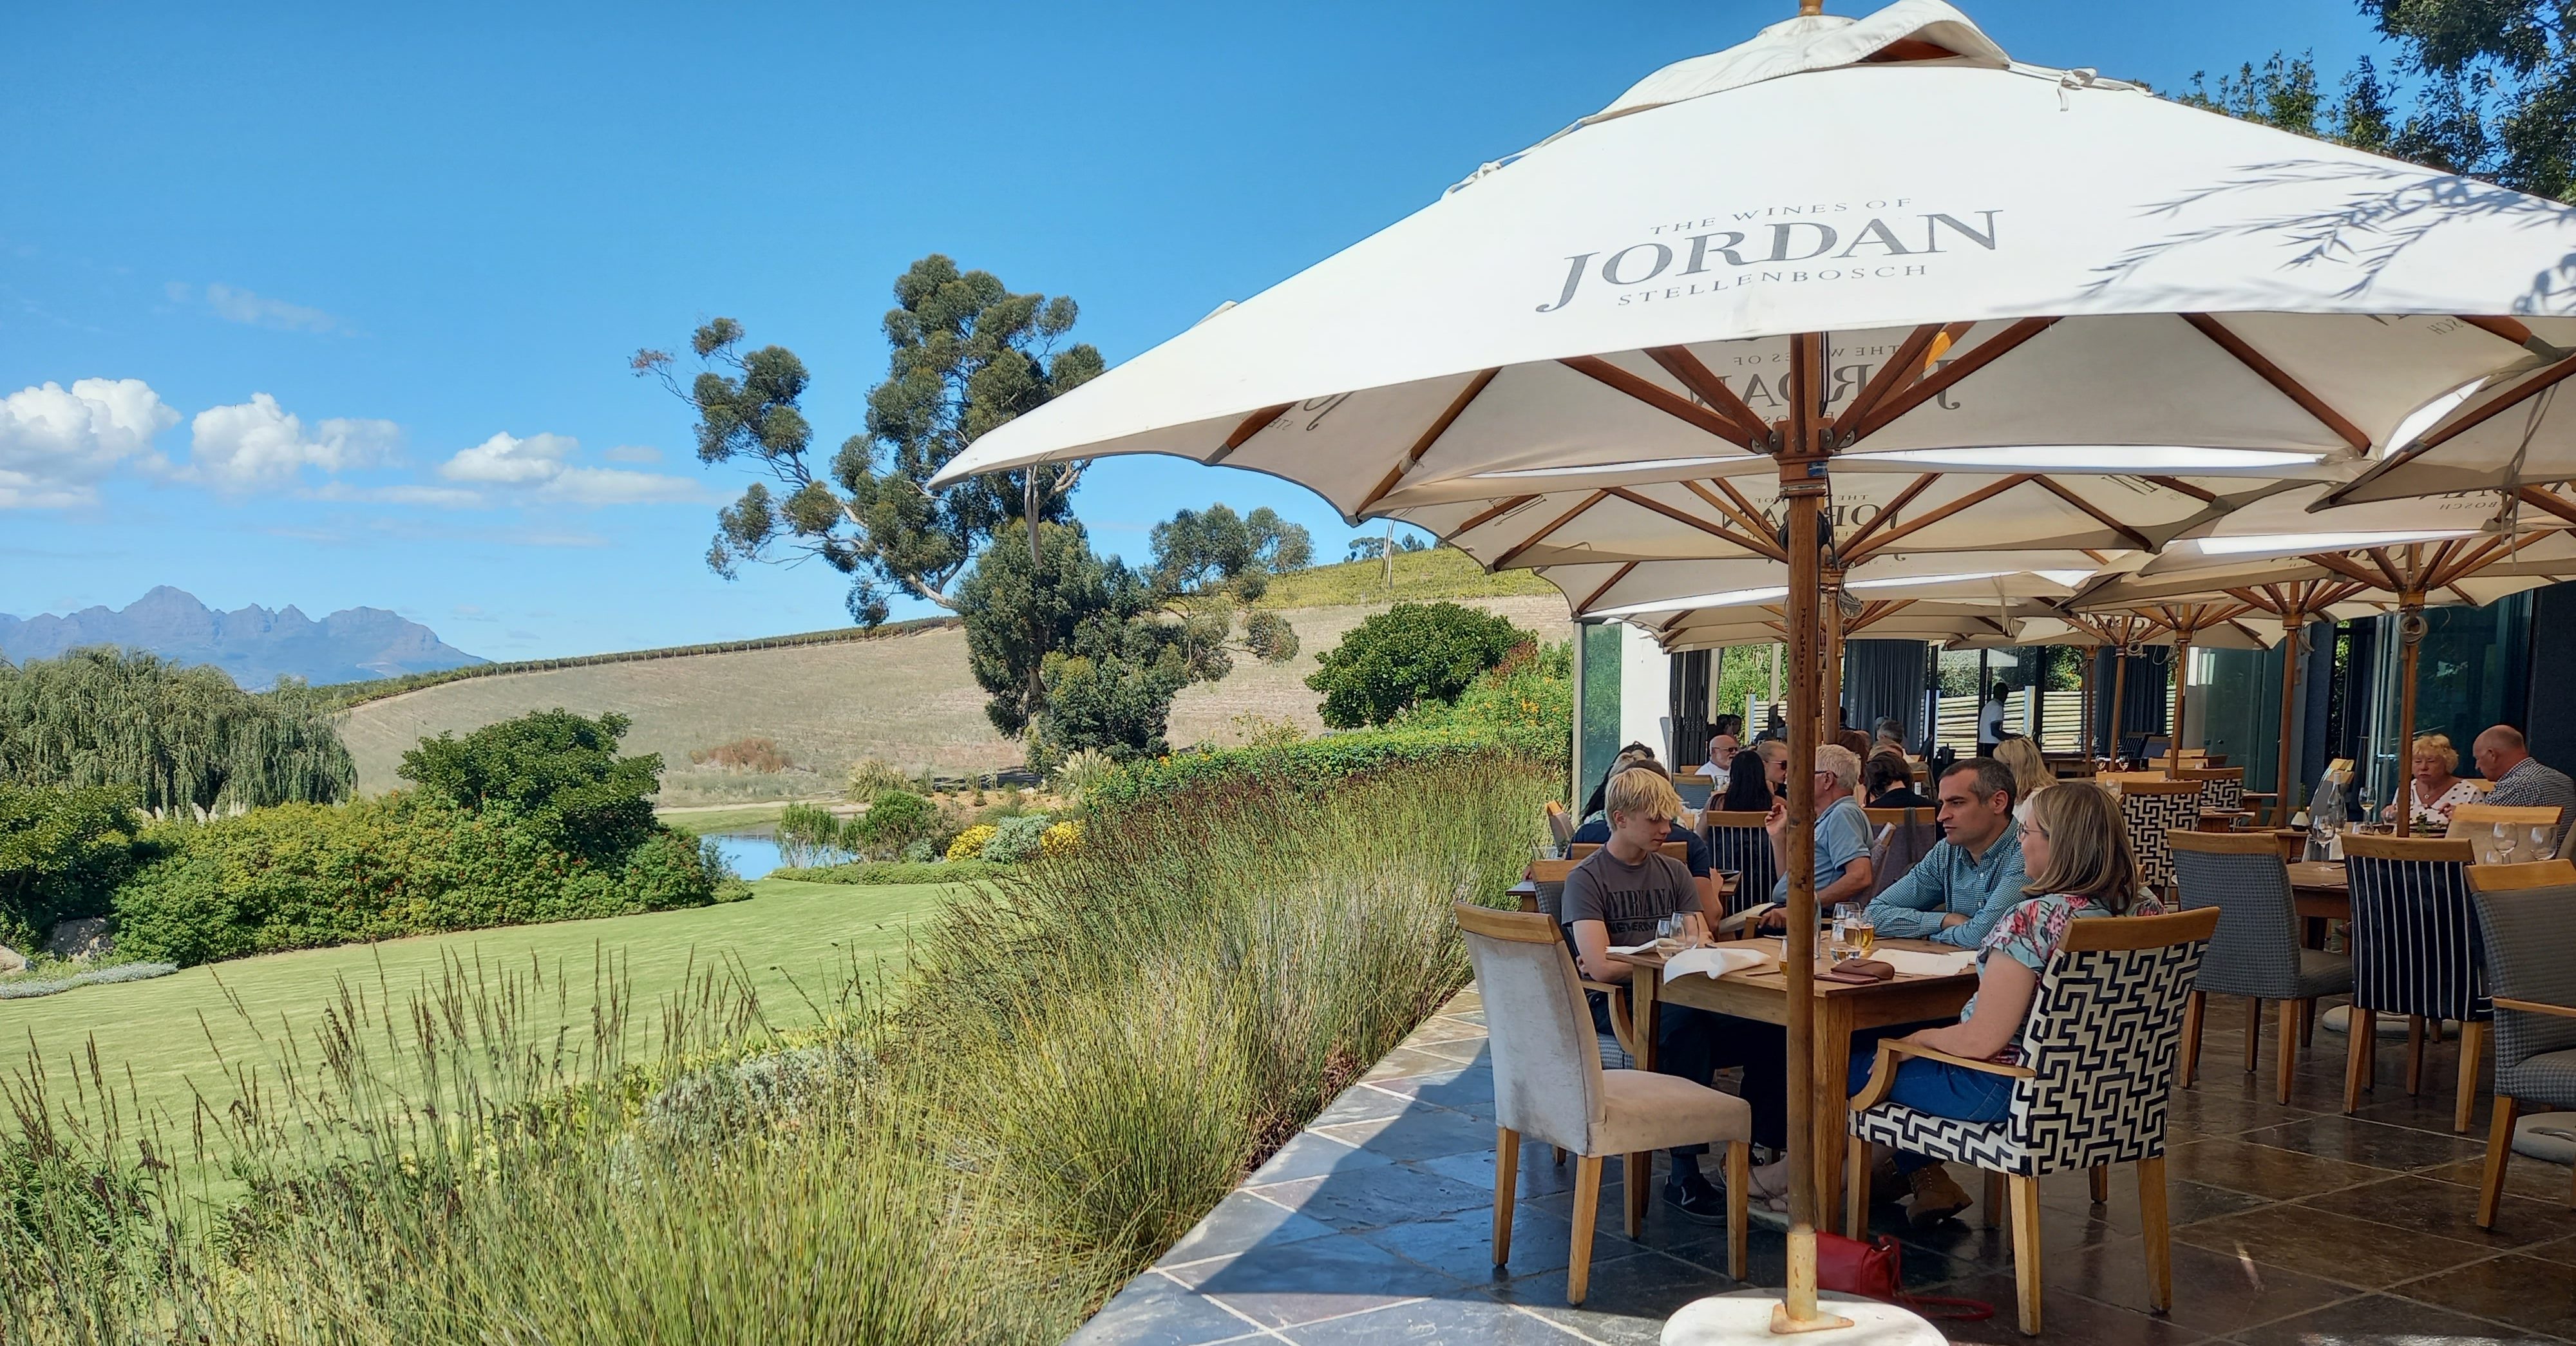 Jordan Restaurant with George Jardine at Jordan Wine Estate in Stellenbosch